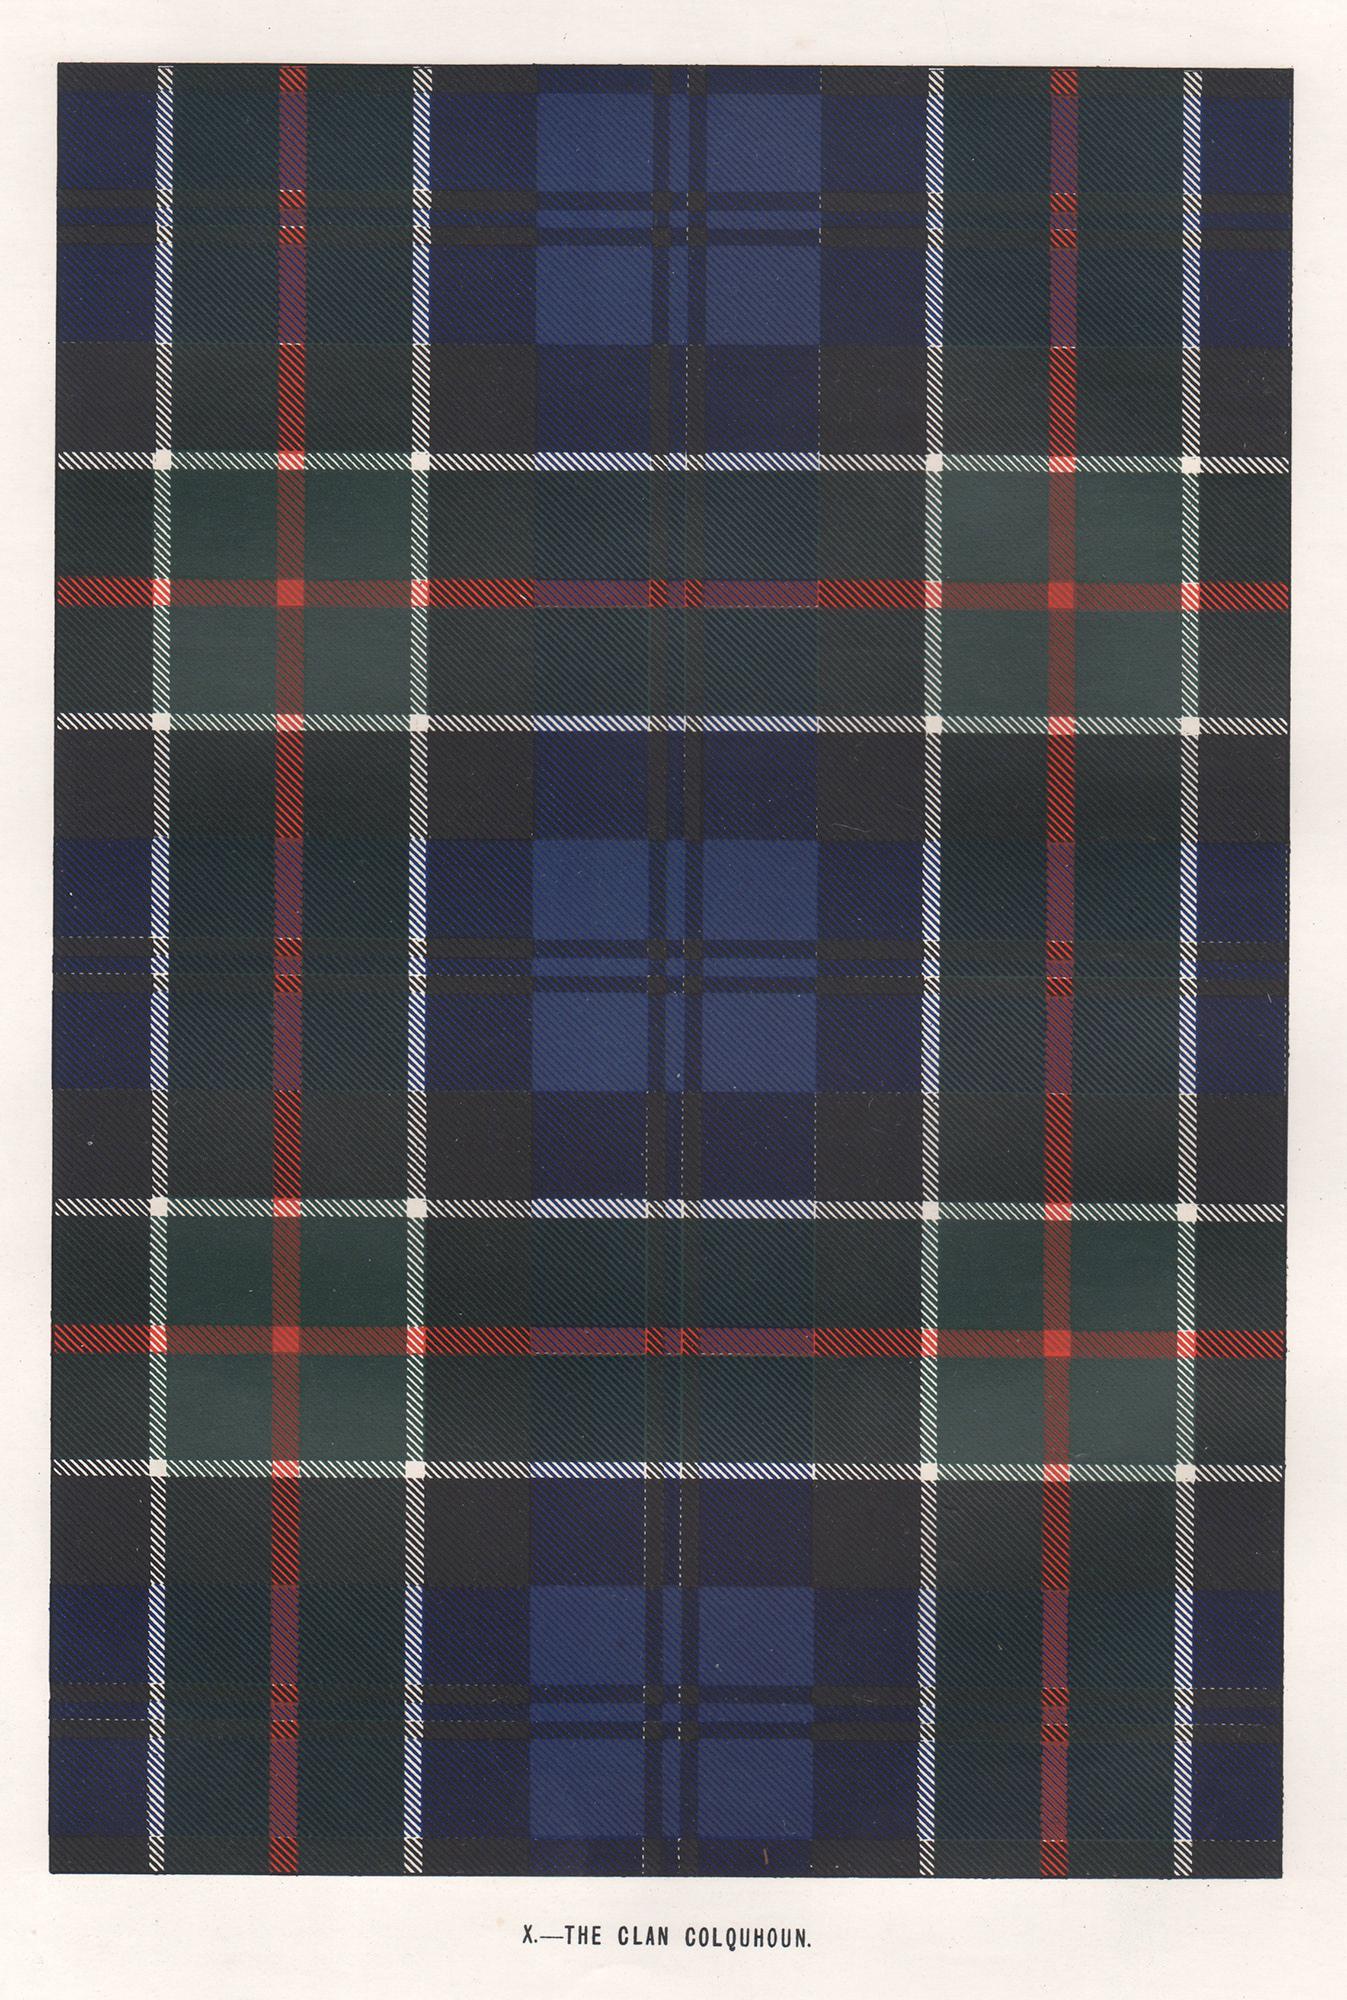 Unknown Abstract Print - The Clan Colquhoun (Tartan), Scottish Scotland art design lithograph print